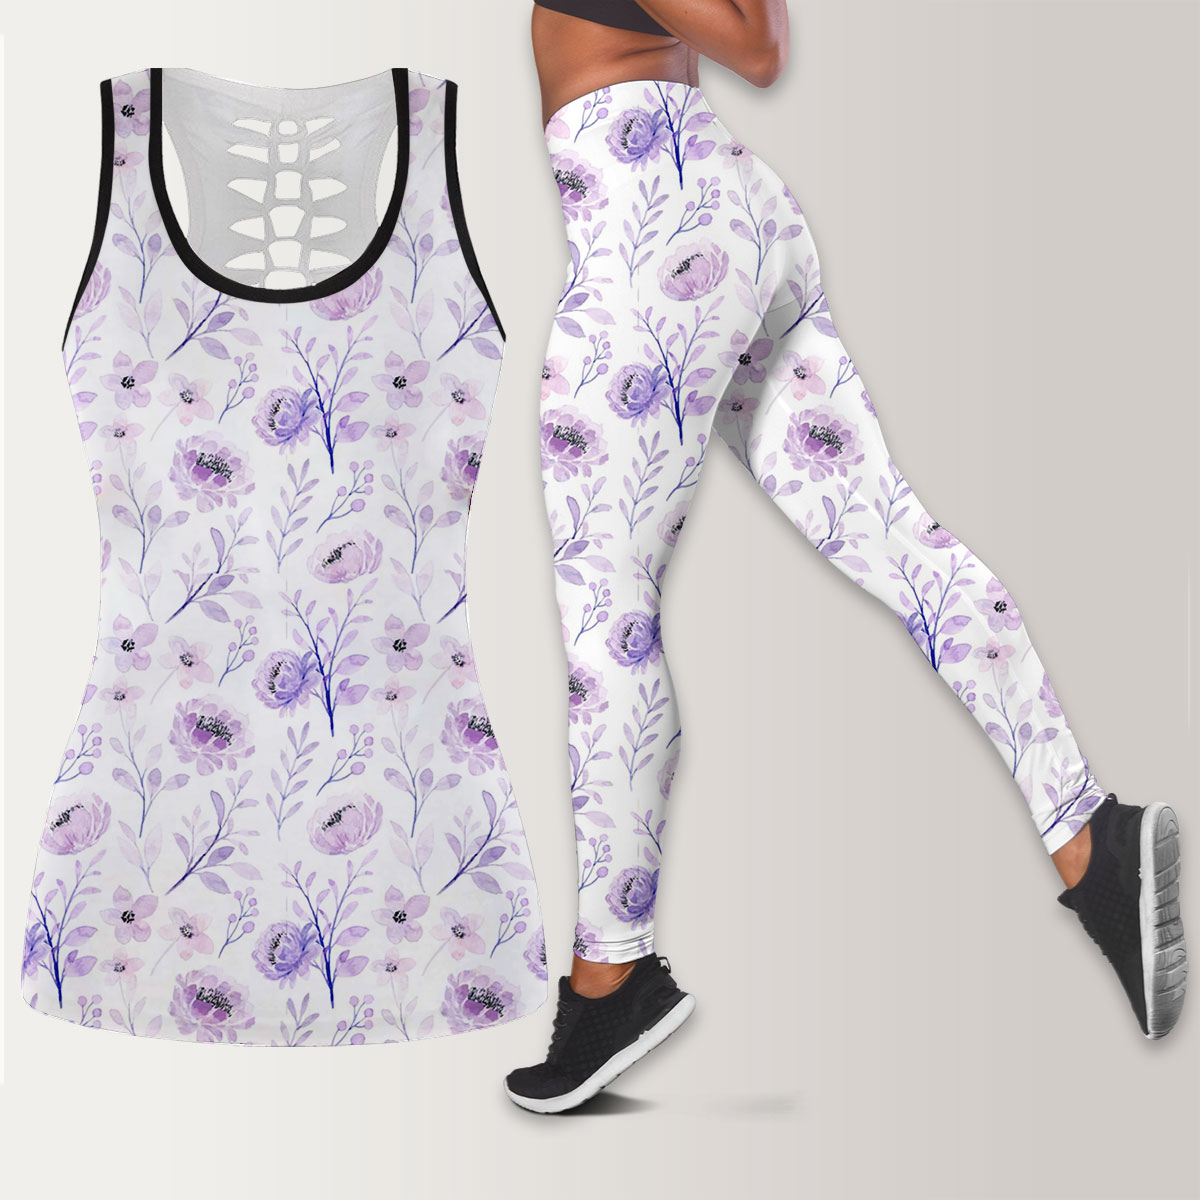 Soft Purple Floral Seamless Pattern Legging Tank Top set